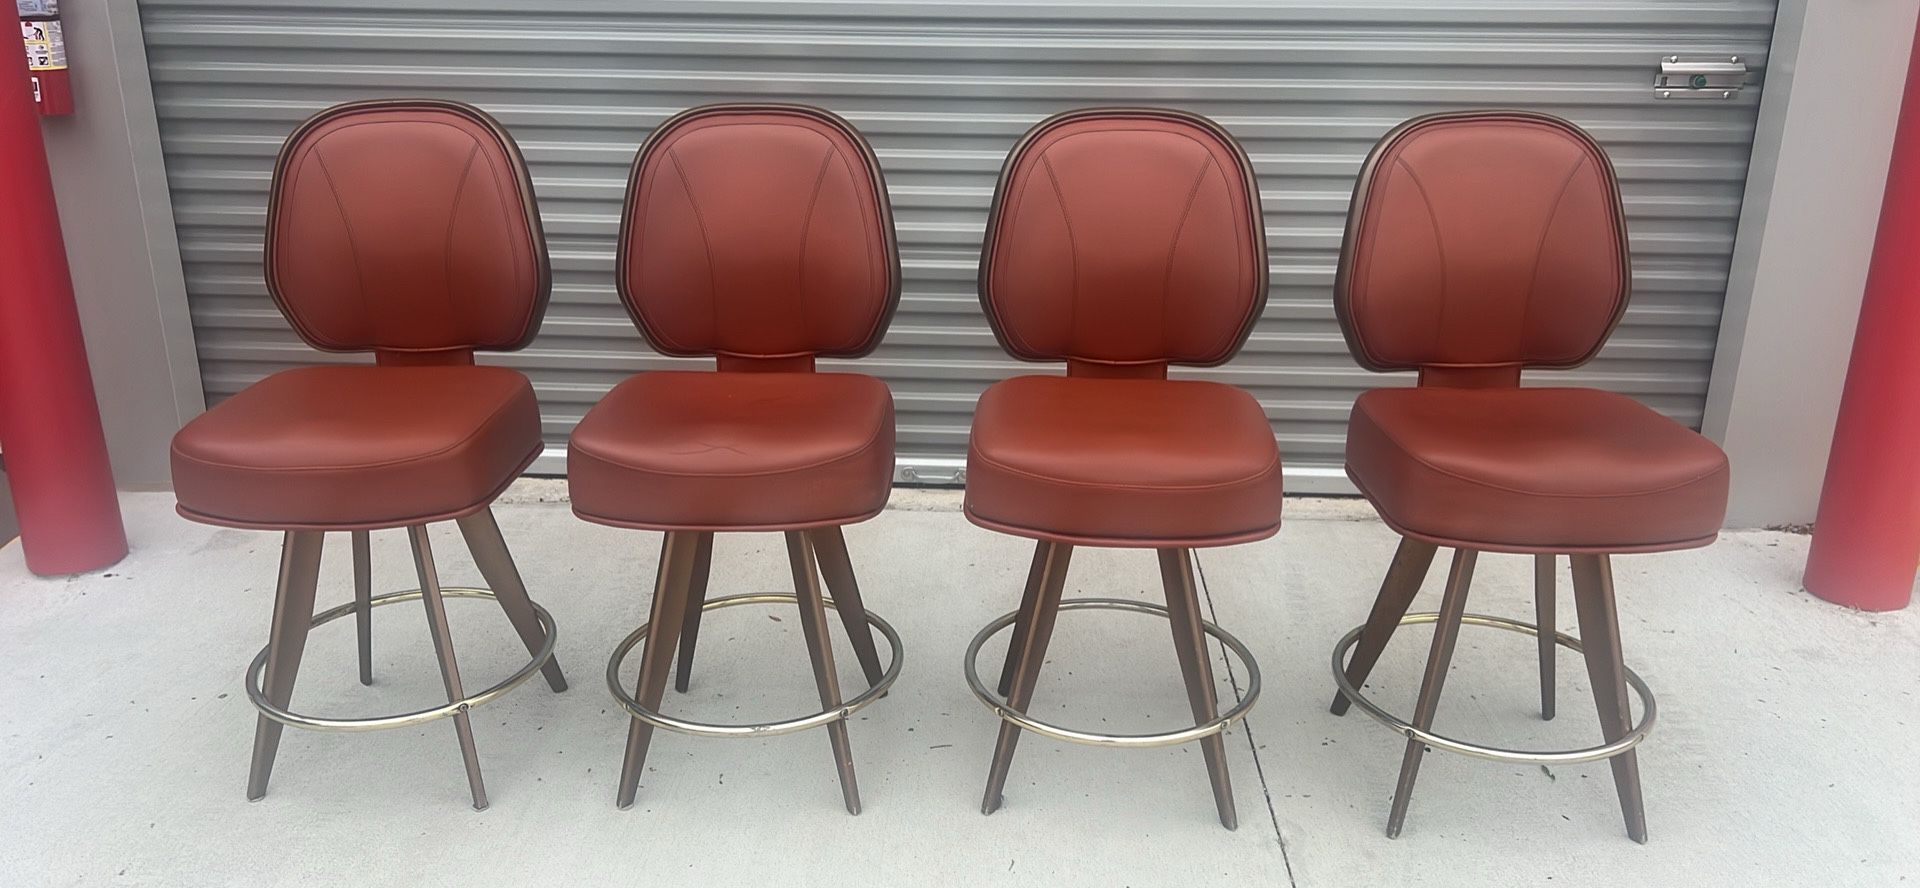 Beautiful Vintage / Retro Style Swivel Barstools / Chairs